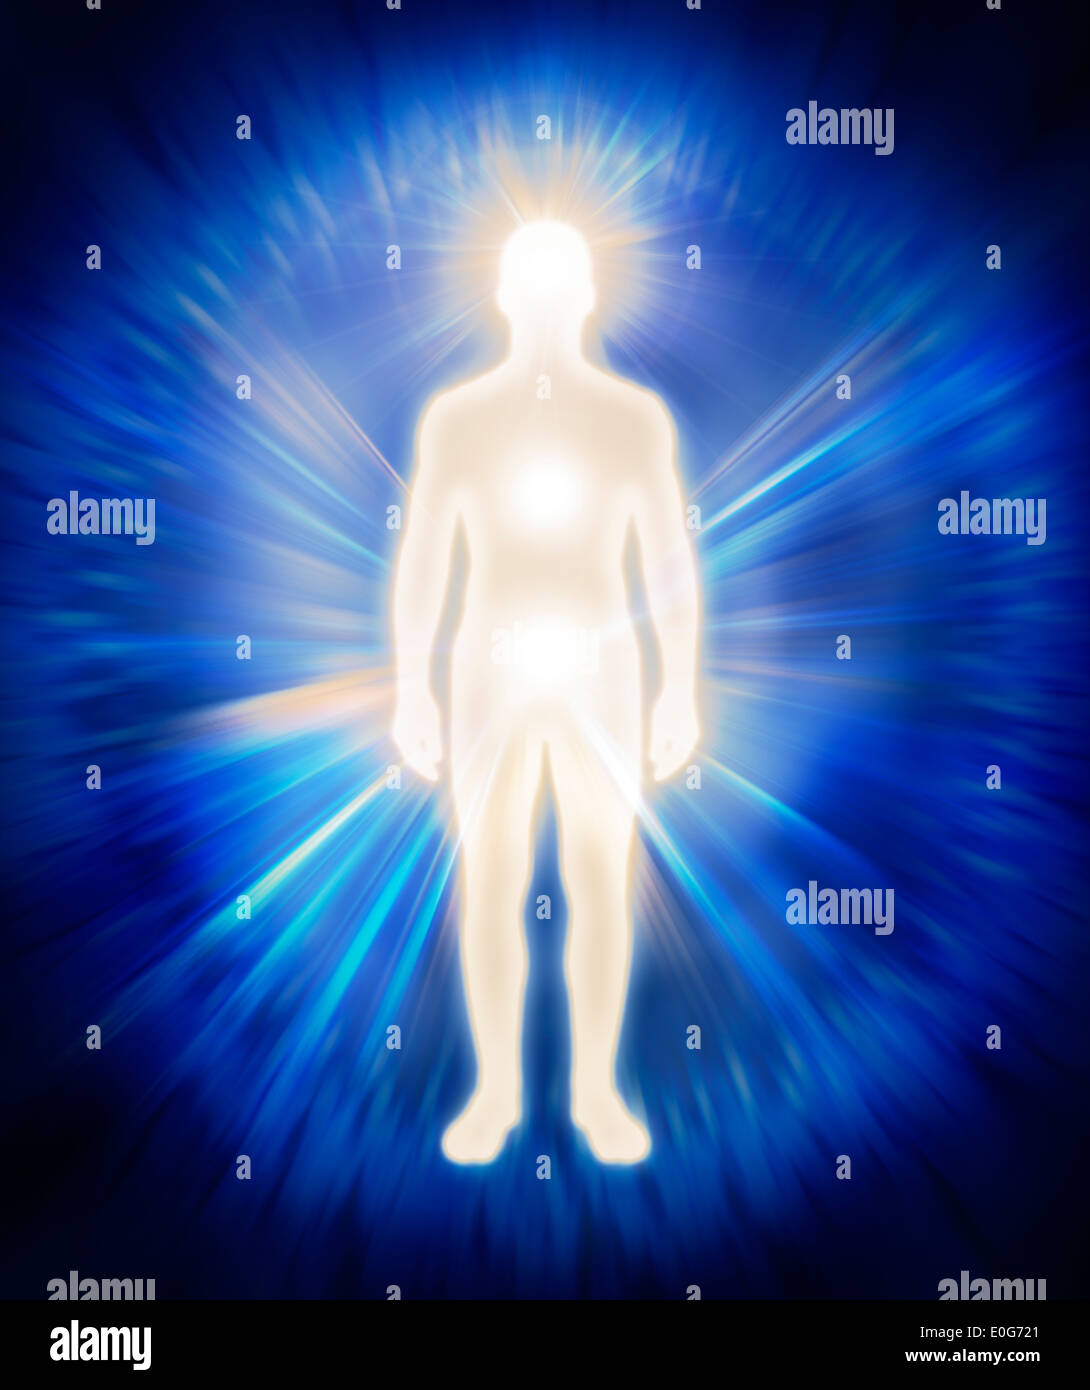 Man ethereal body energy emanations. Human luminous being, aura, spiritual conceptual illustration Stock Photo